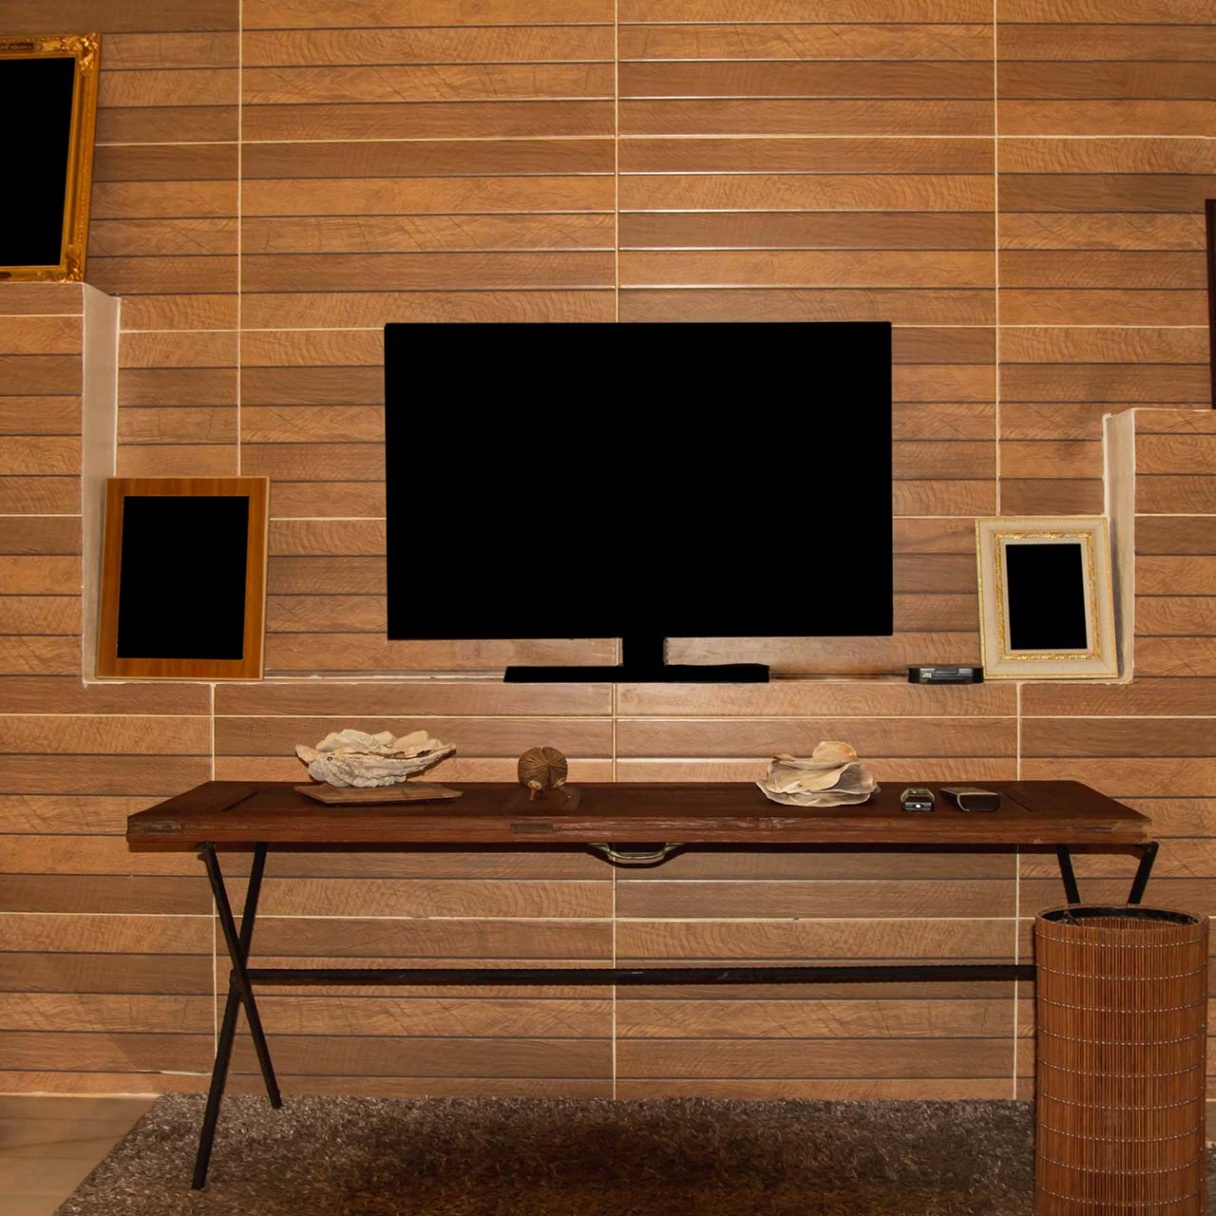 background tv wall design Bulan 4 TV Wall Design Ideas For Your Home  Design Cafe